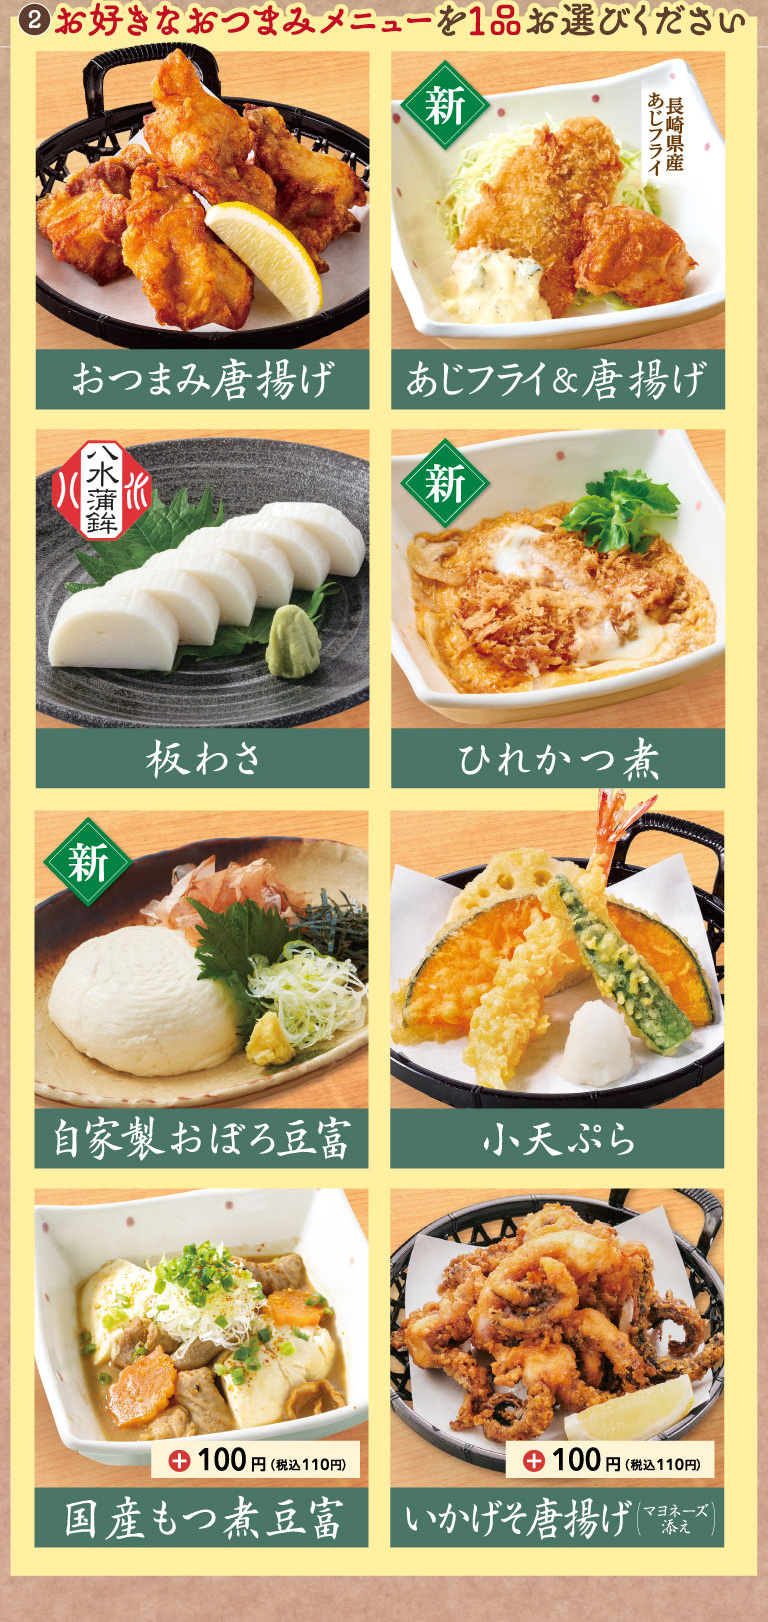 Horoyume set menu to choose from